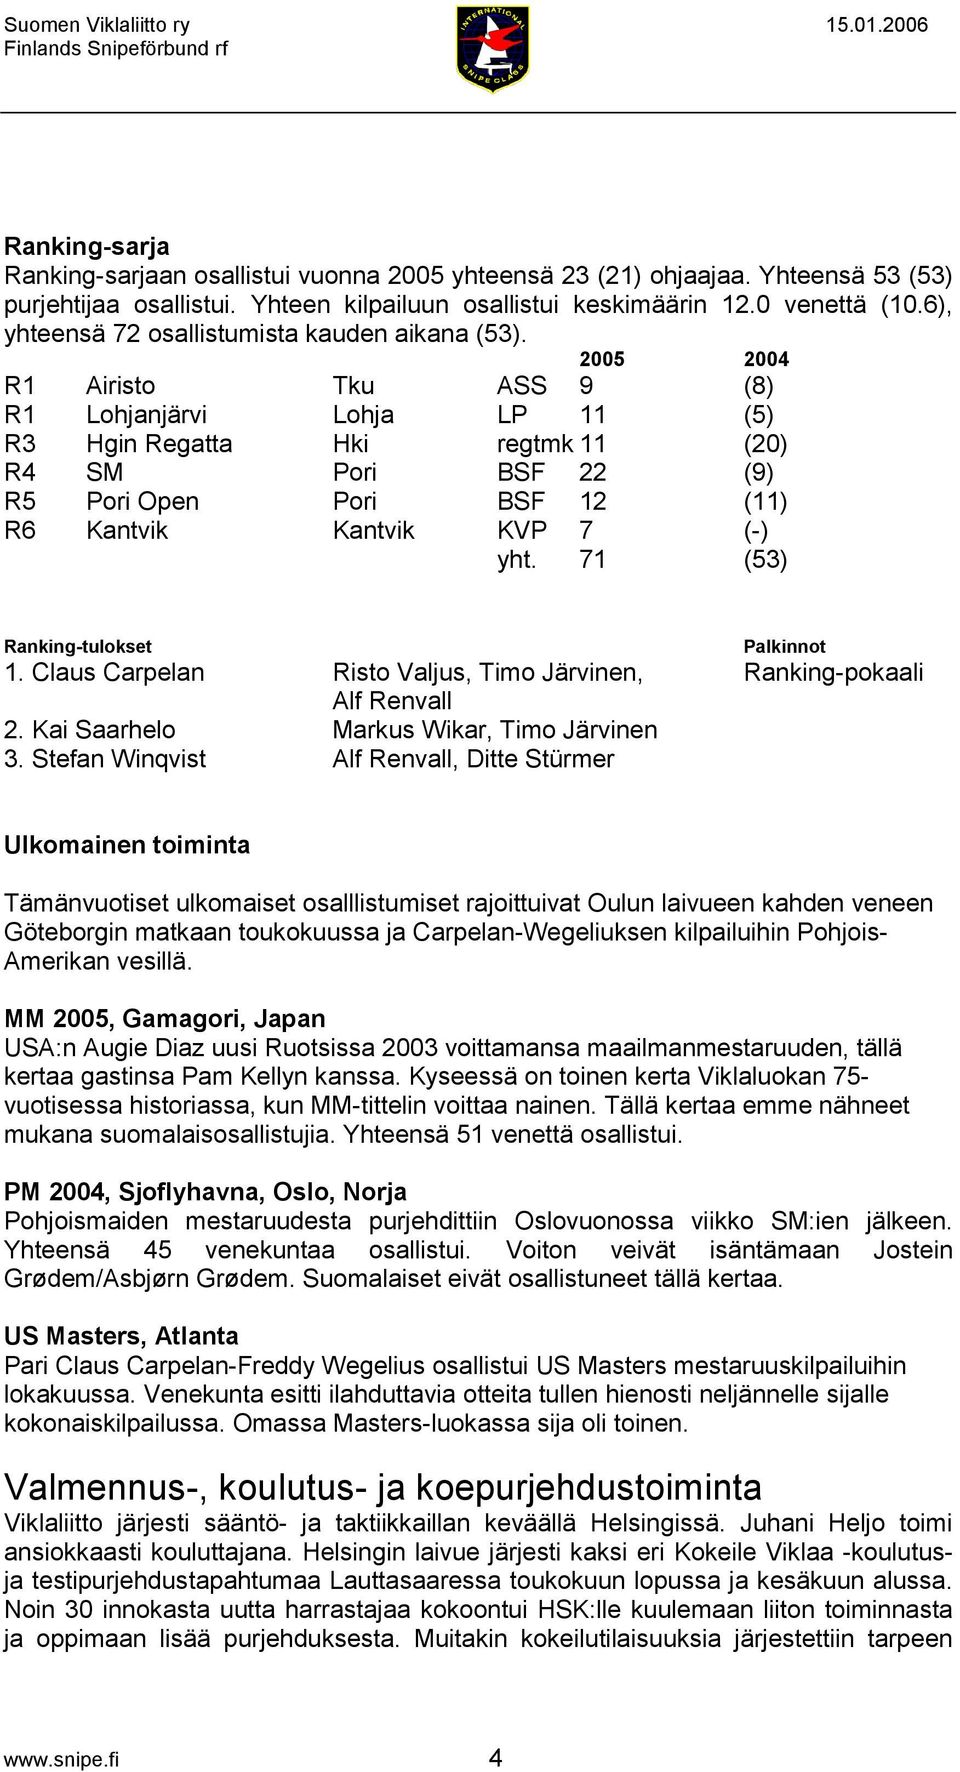 2005 2004 R1 Airisto Tku ASS 9 (8) R1 Lohjanjärvi Lohja LP 11 (5) R3 Hgin Regatta Hki regtmk 11 (20) R4 SM Pori BSF 22 (9) R5 Pori Open Pori BSF 12 (11) R6 Kantvik Kantvik KVP 7 (-) yht.